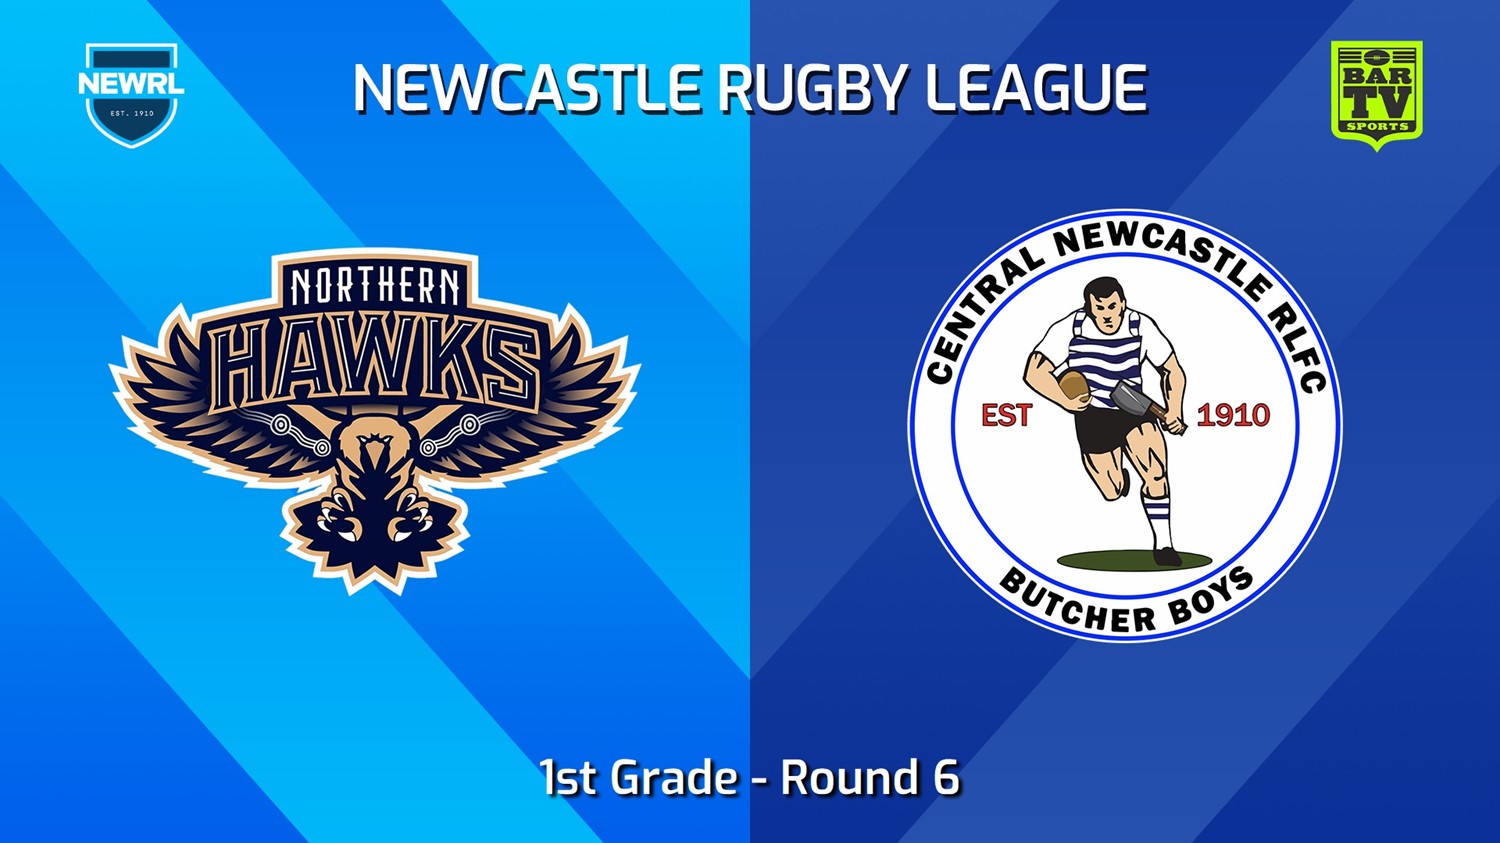 240525-video-Newcastle RL Round 6 - 1st Grade - Northern Hawks v Central Newcastle Butcher Boys Slate Image